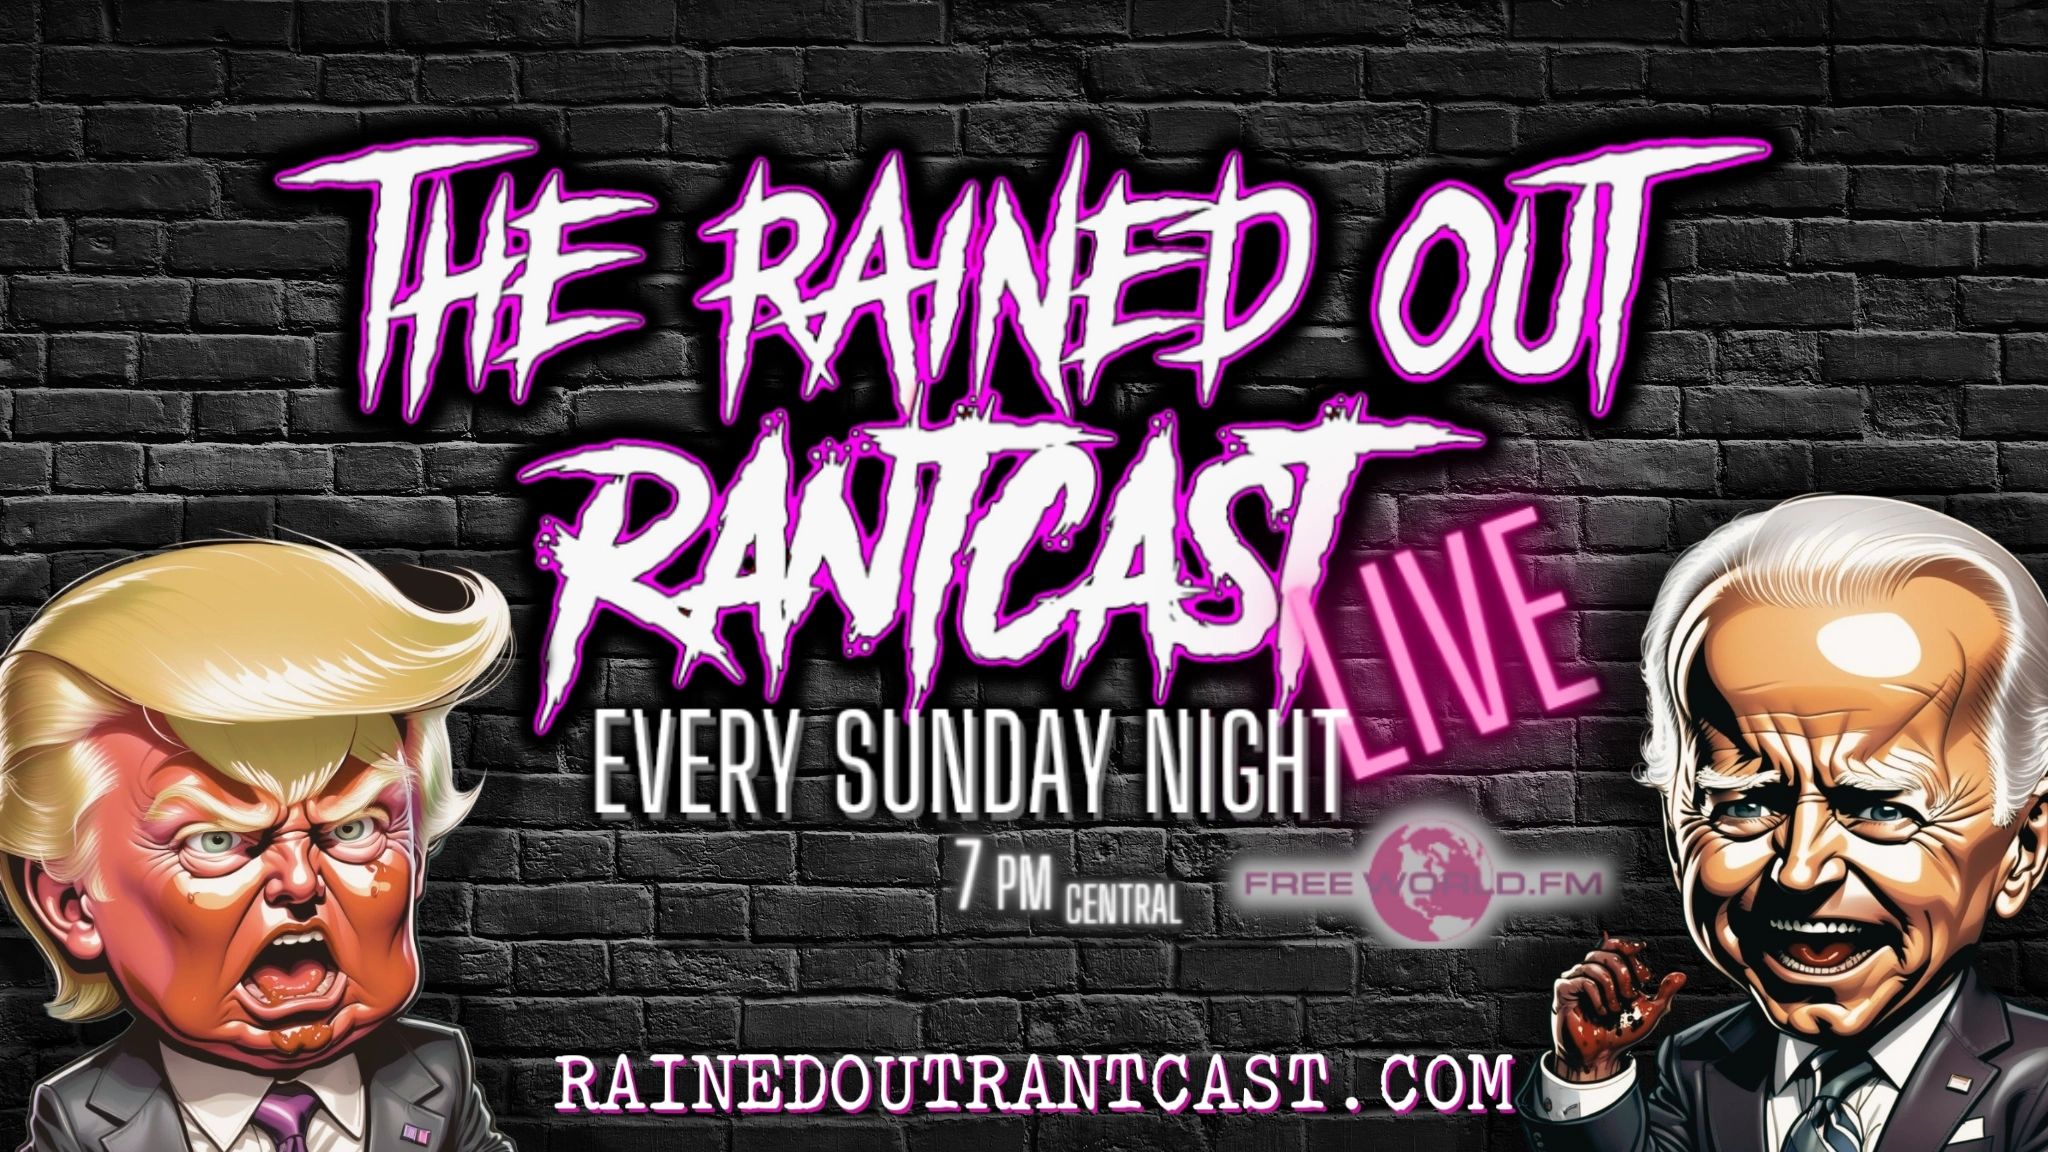 live podcast streaming, Spotify, Trump, RantCast, Rained Out Rantcast